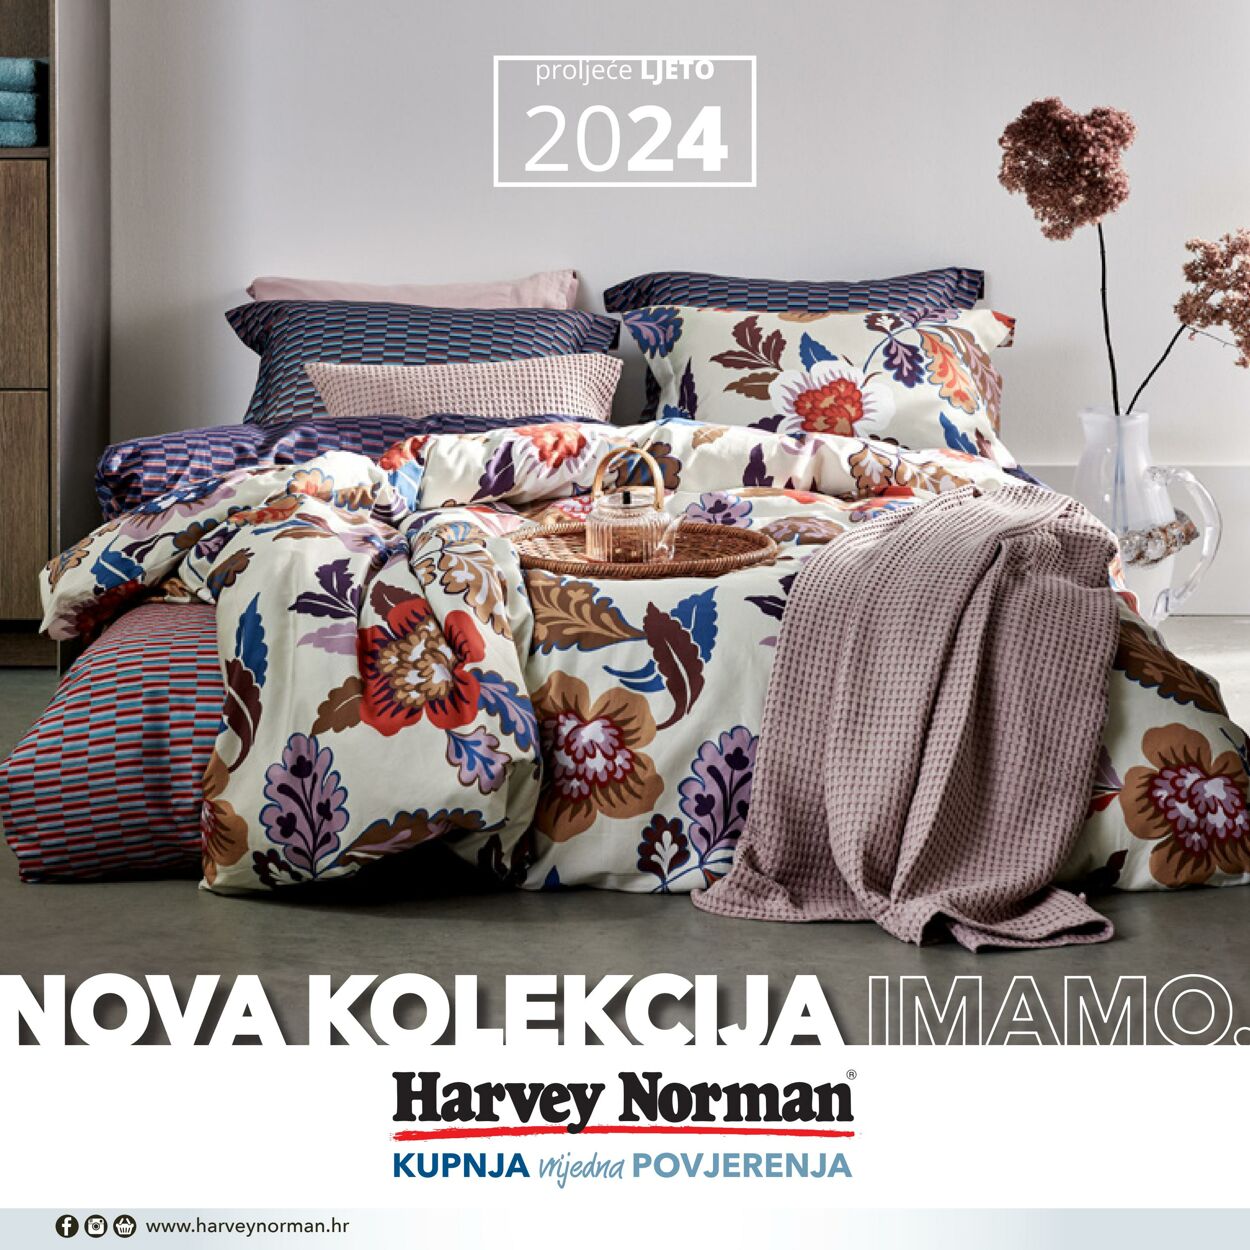 Katalog Harvey Norman - Nova kolekcija posteljine 2024 1 ožu., 2024 - 31 kol., 2024